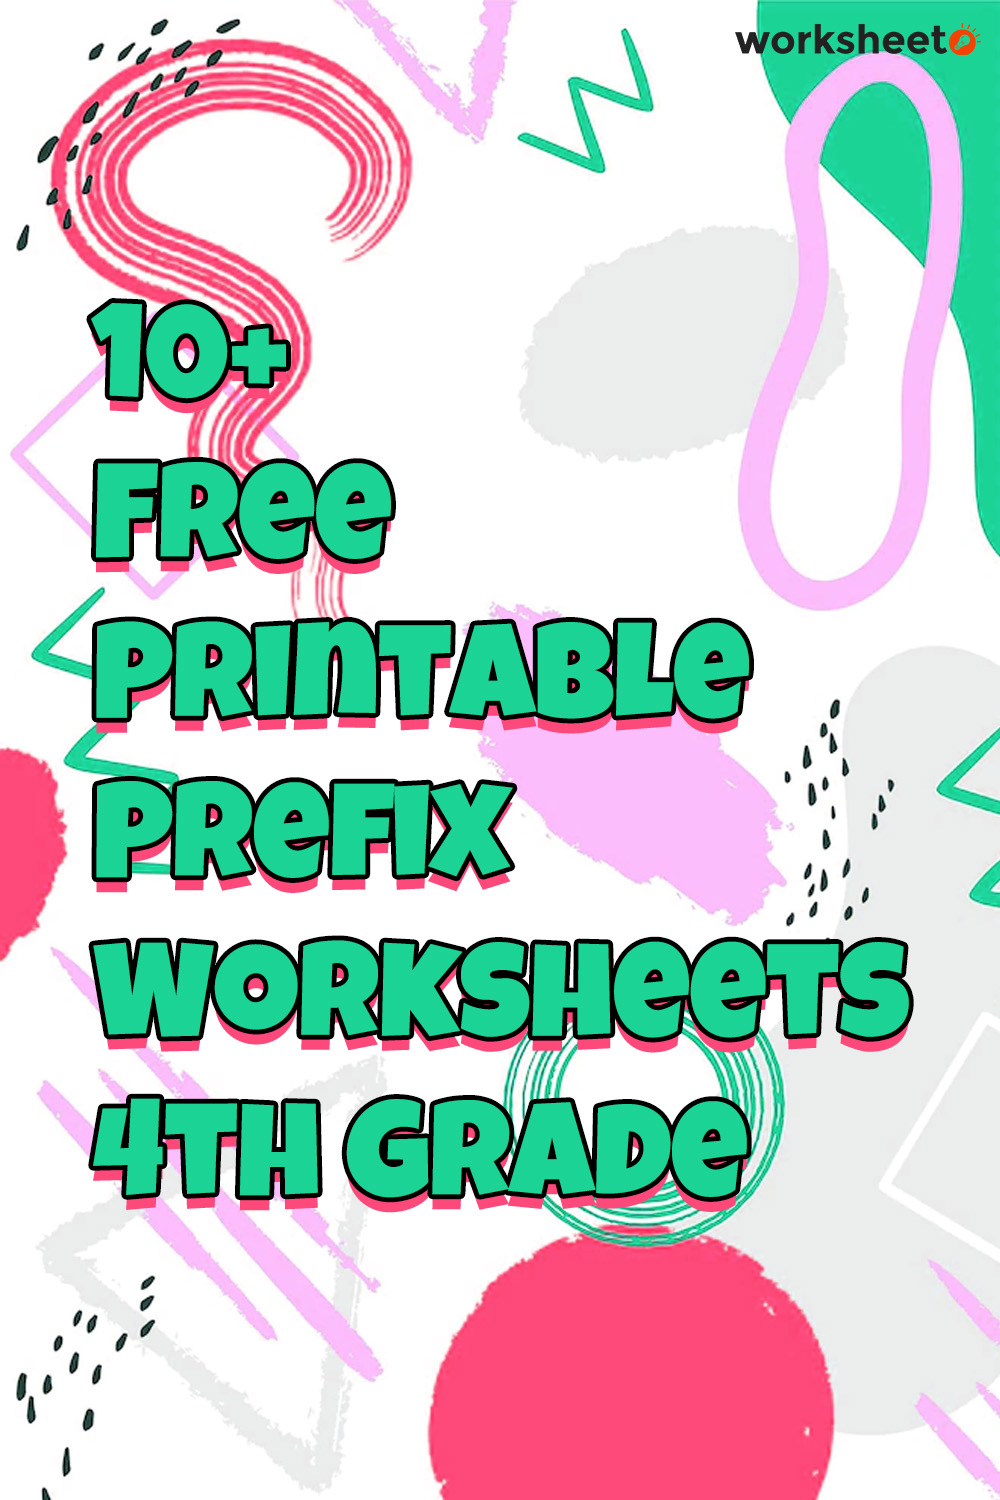 Free Printable Prefix Worksheets 4th Grade